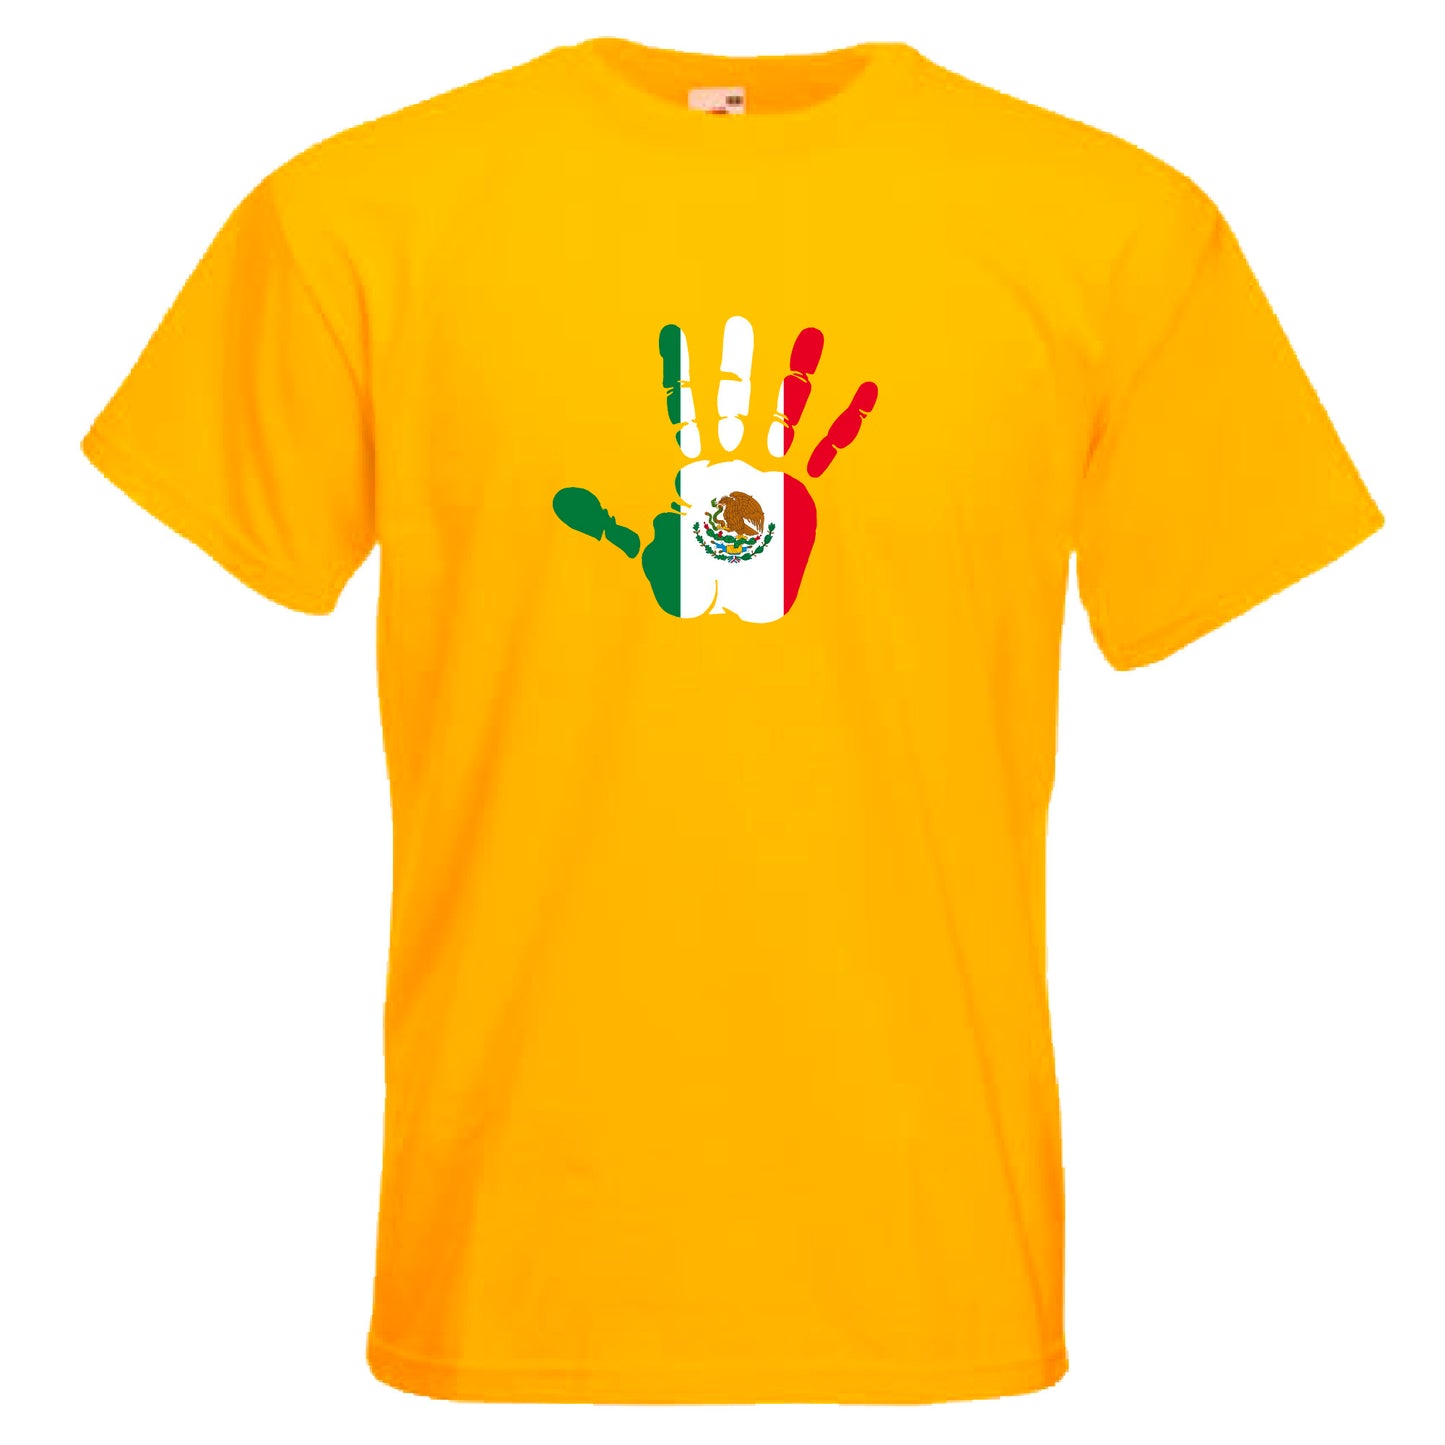 INDIGOS UG - T-Shirt Herren - Mexiko - Hand - Fussball